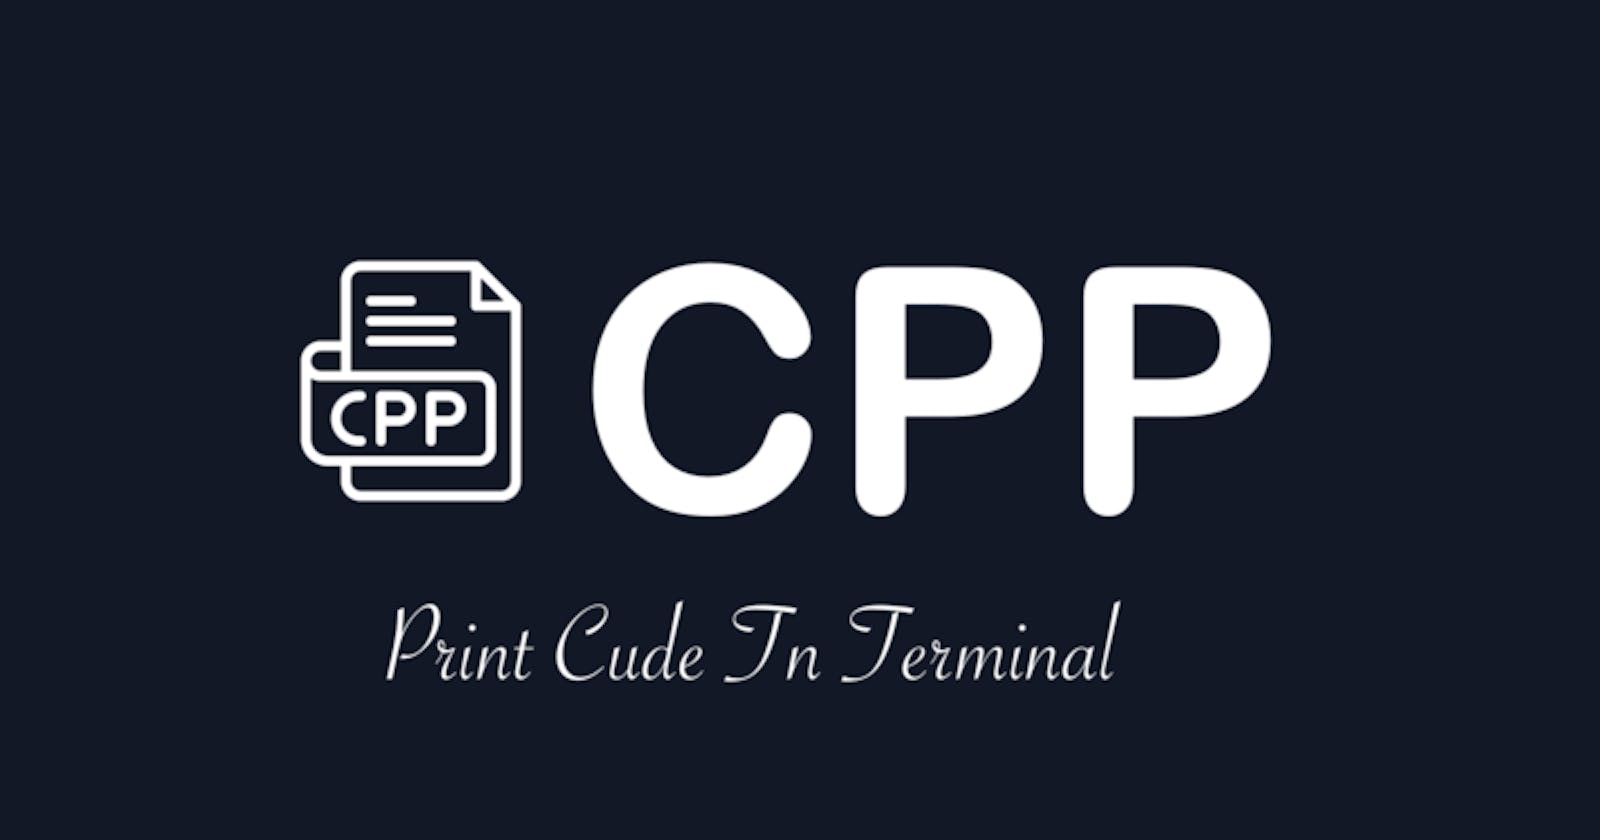 Print CUBE using C++